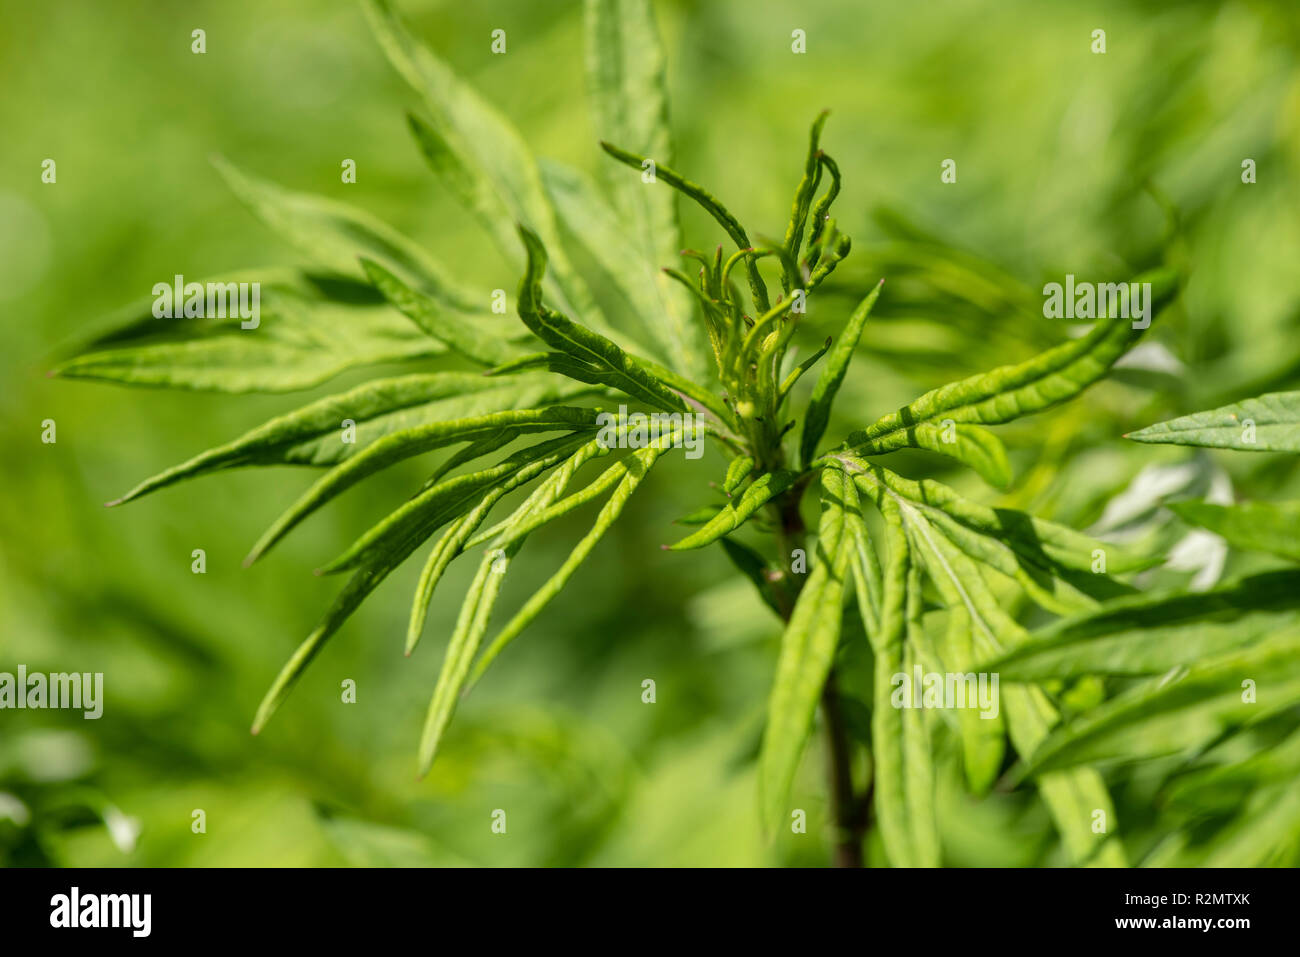 Mugwort as a medicinal plant for natural medicine and herbal medicine Stock Photo